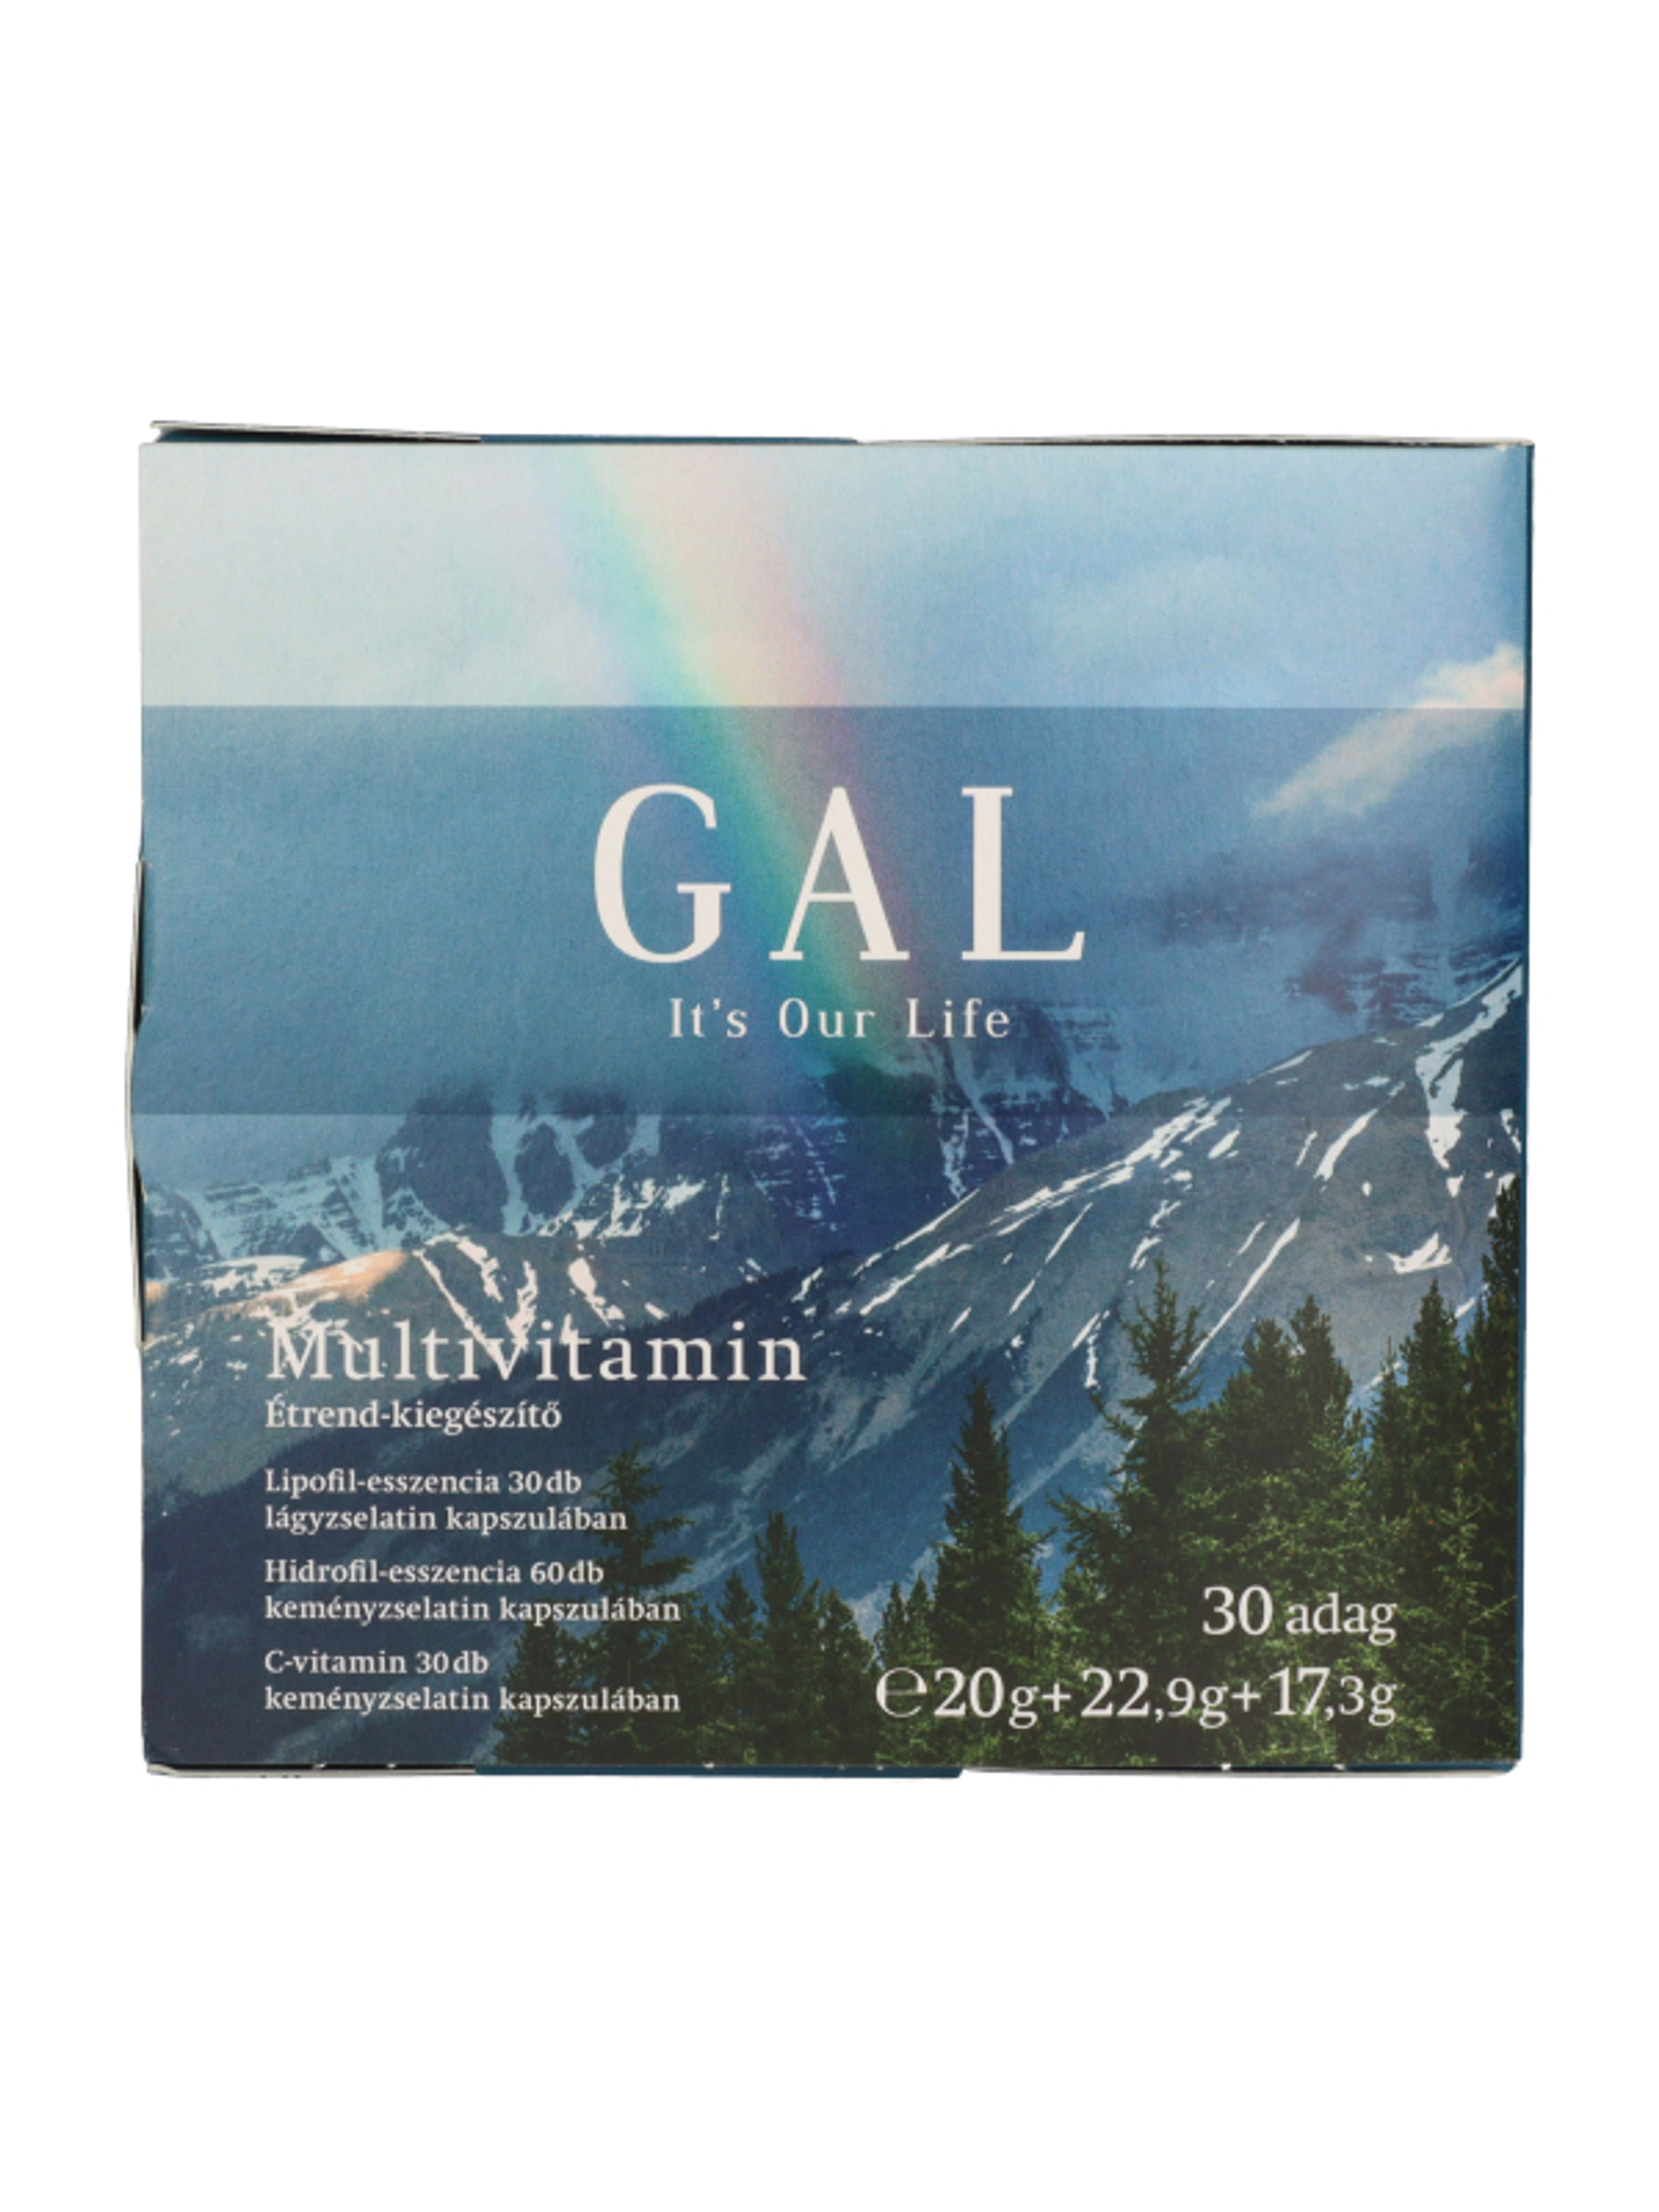 Gal Multivitamin 30 adag étrend-kiegészítő kapszulák - 1 db